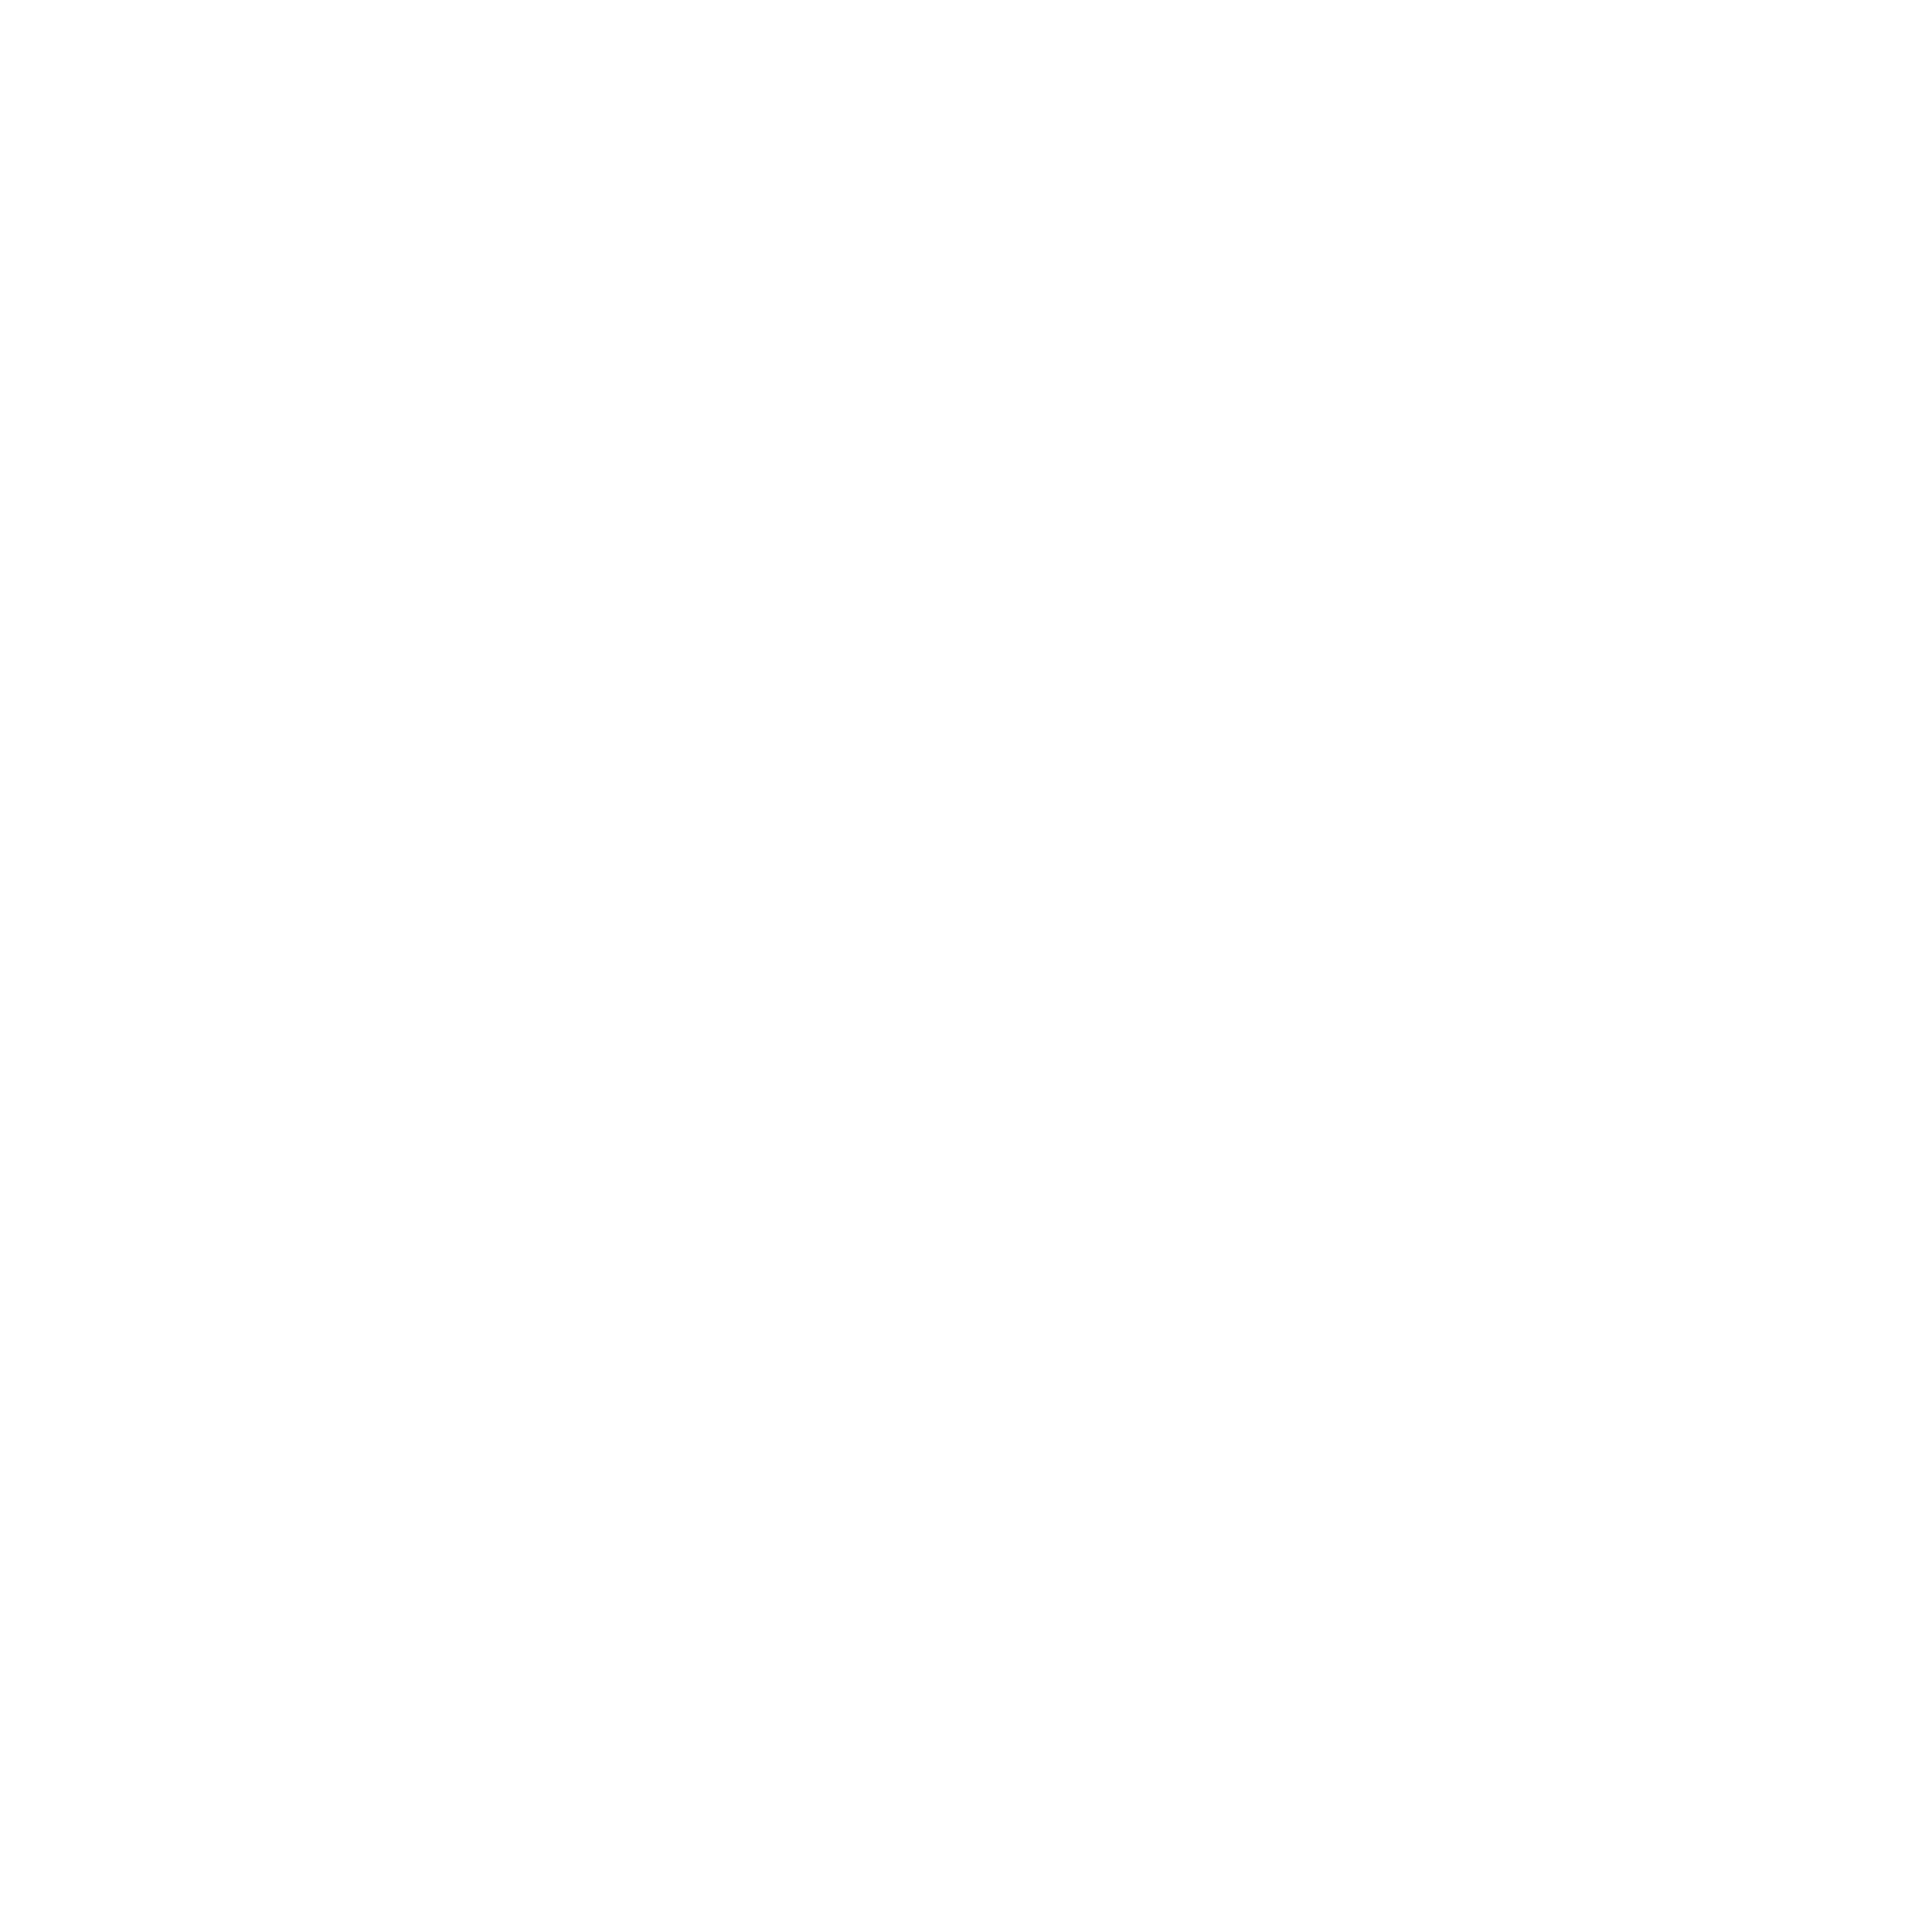 Master certified remodeler